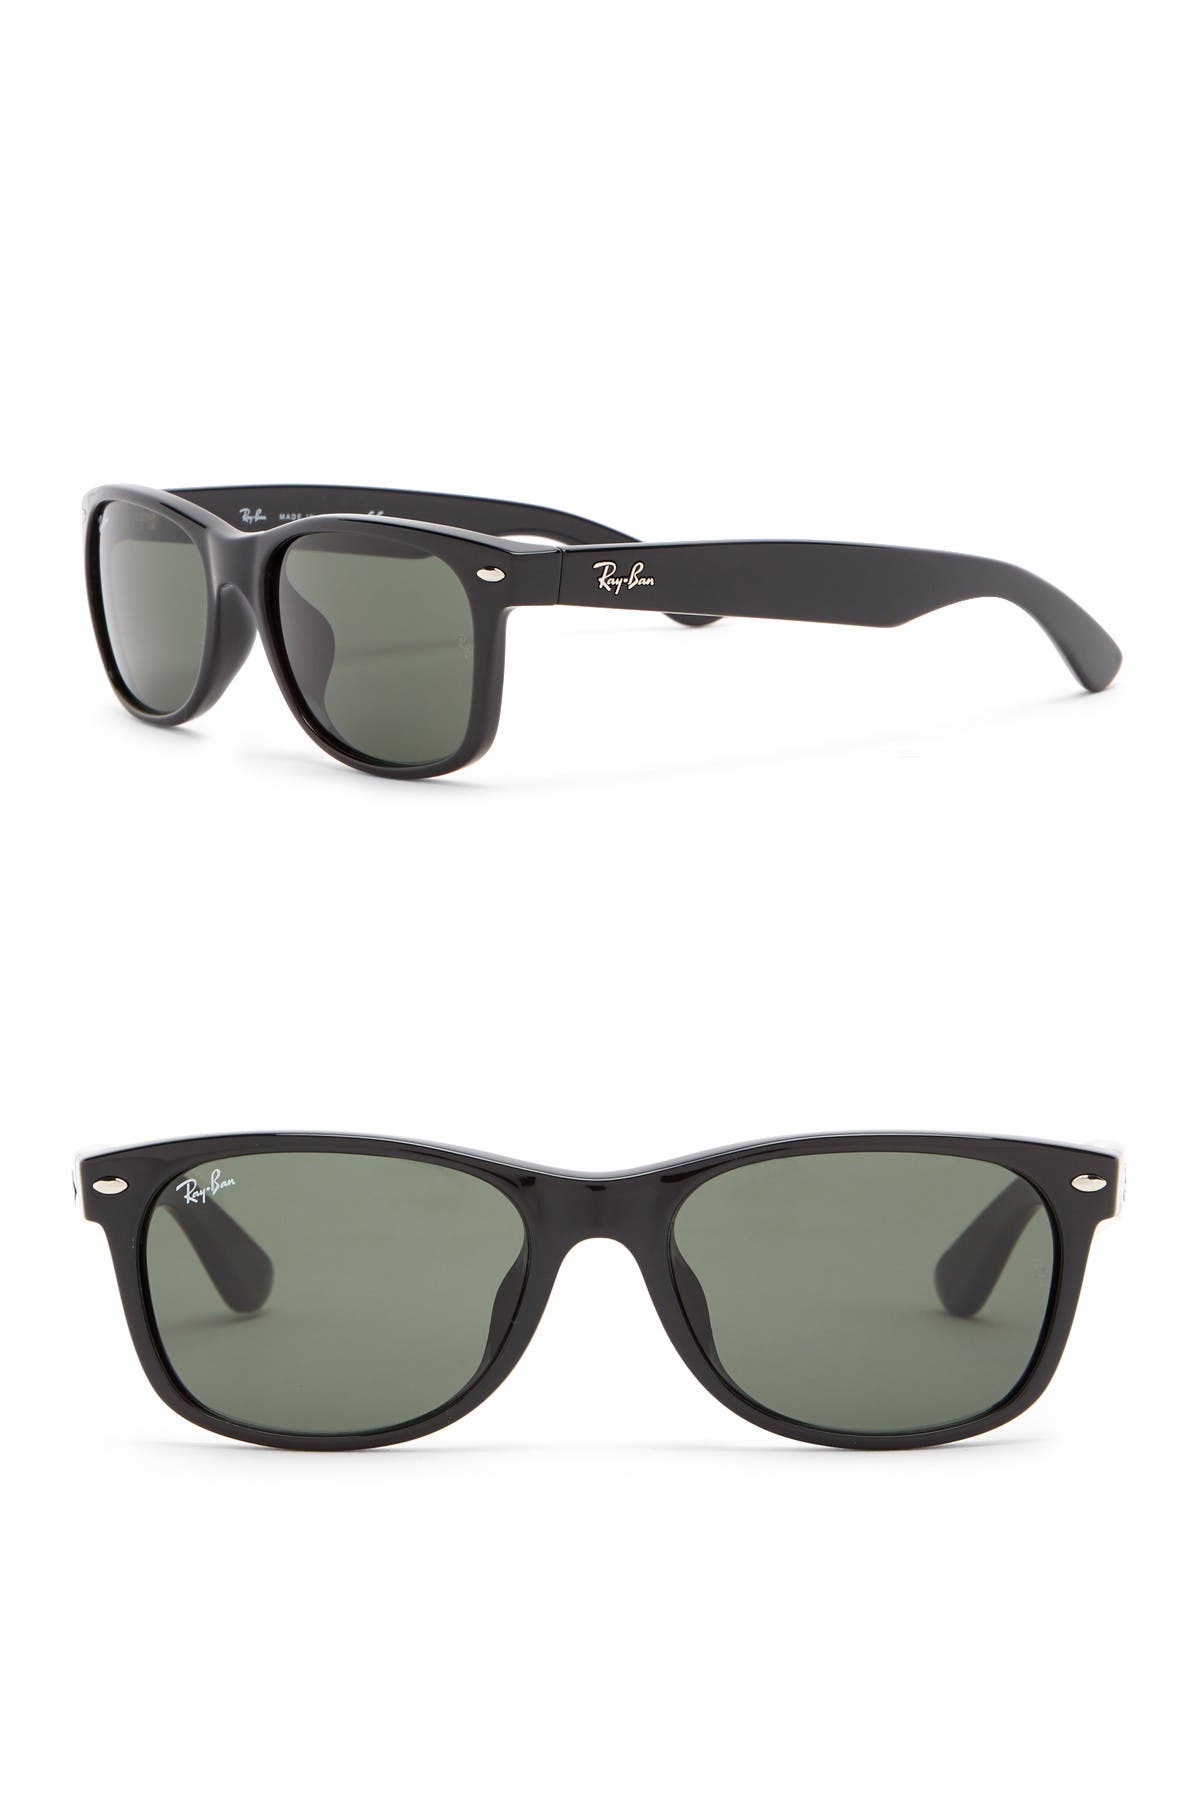 55mm wayfarer sunglasses